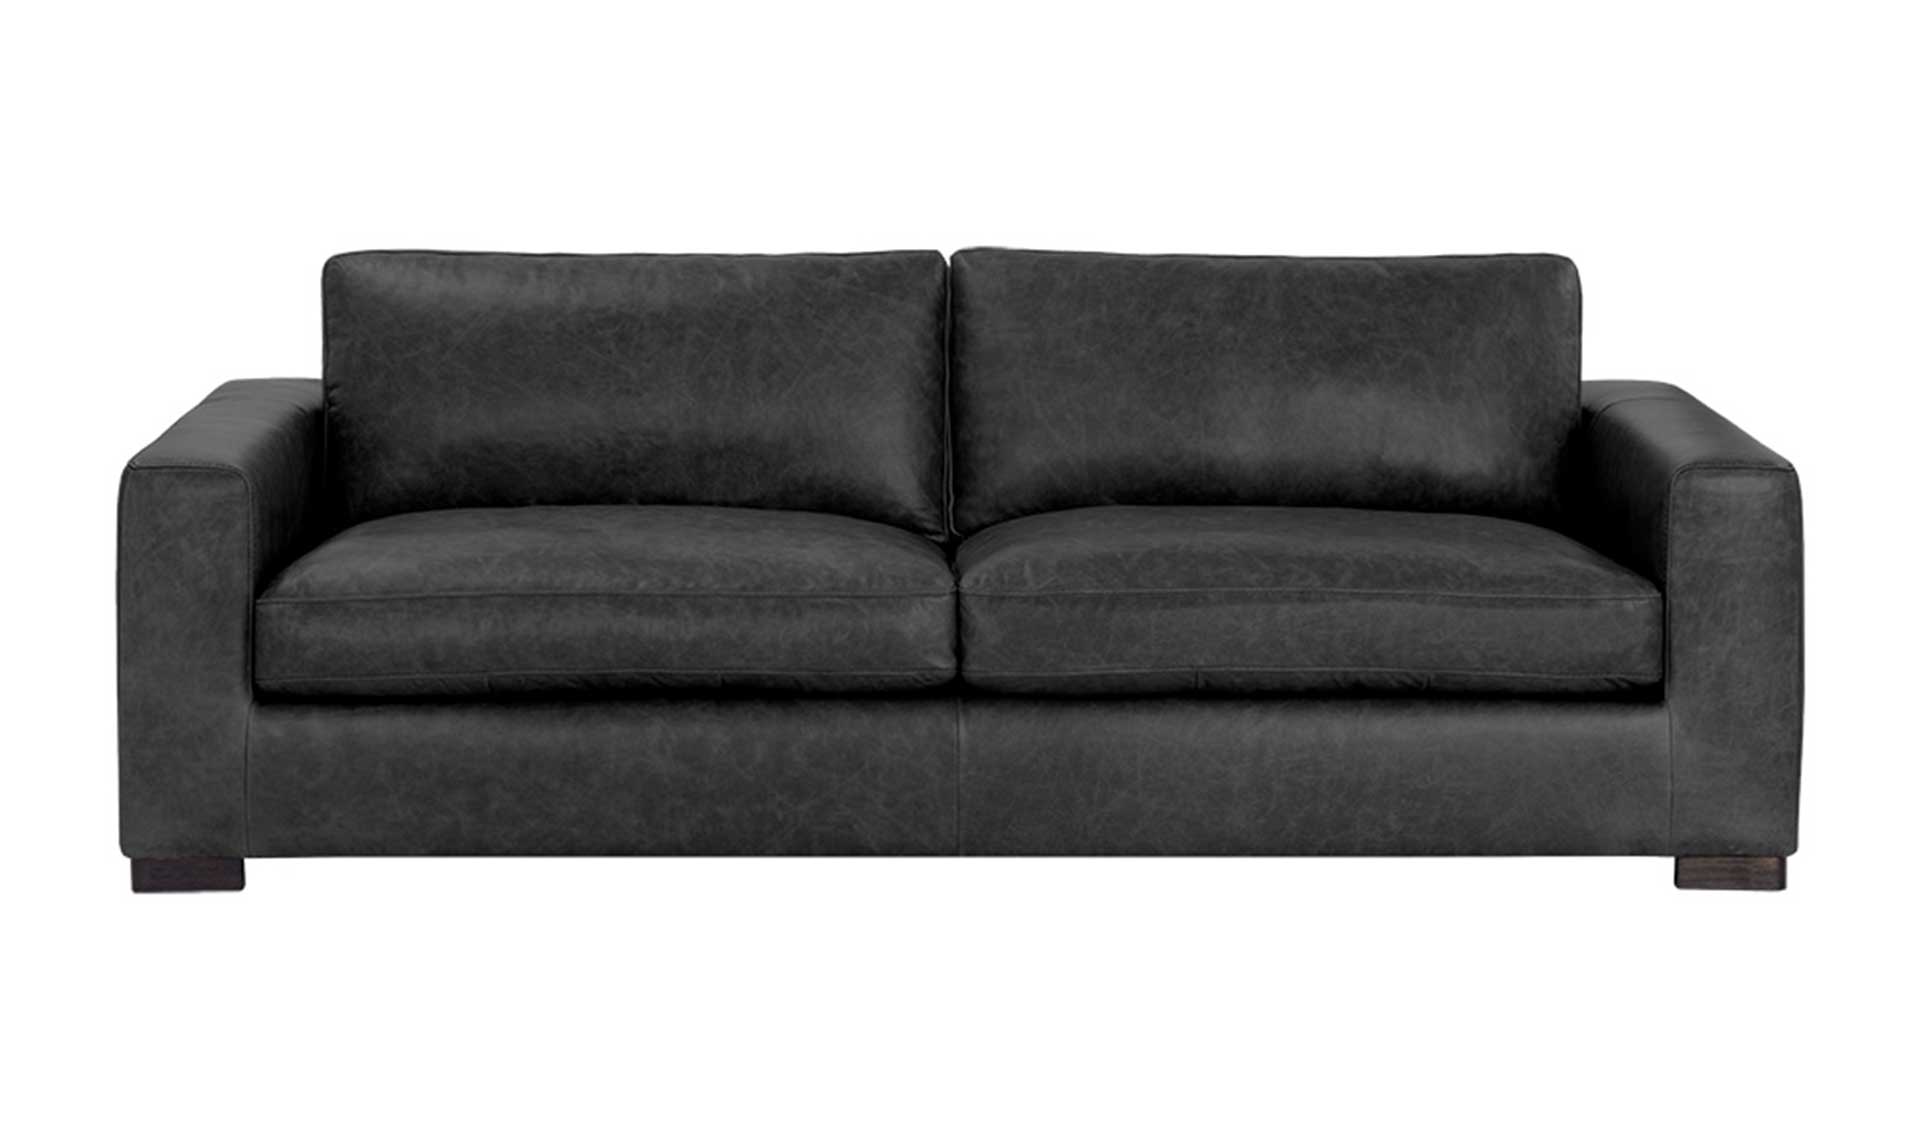 baylor sofa marseille black leather full 2